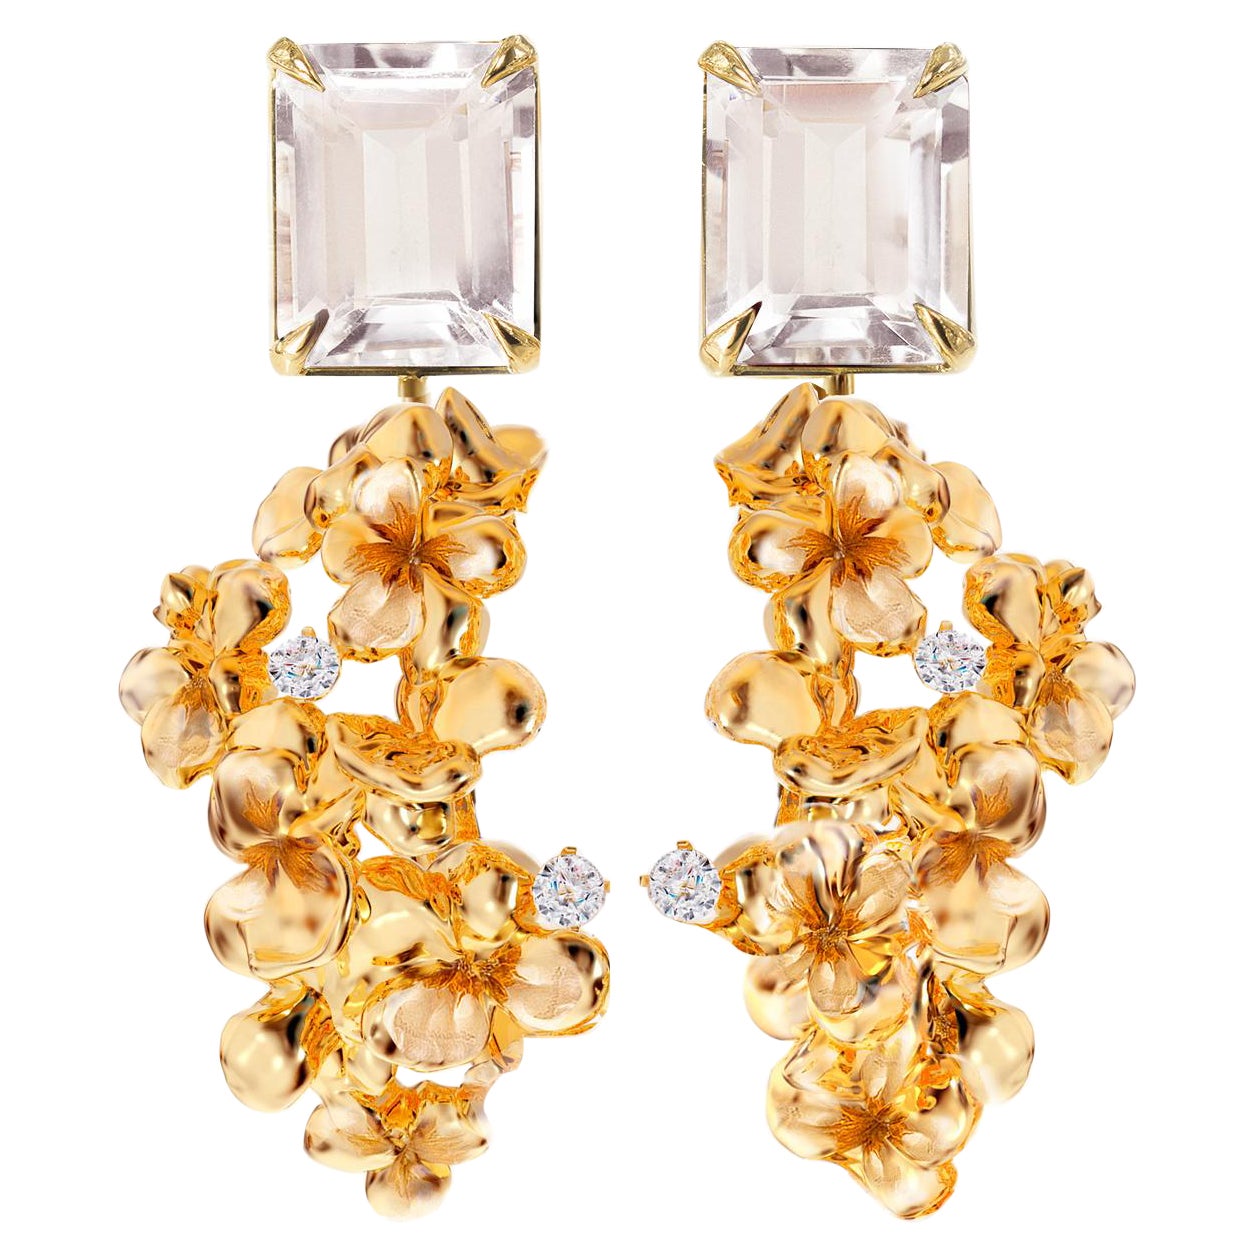 Eighteen Karat Yellow Gold Stud Earrings with Diamonds and Light Pink Morganites